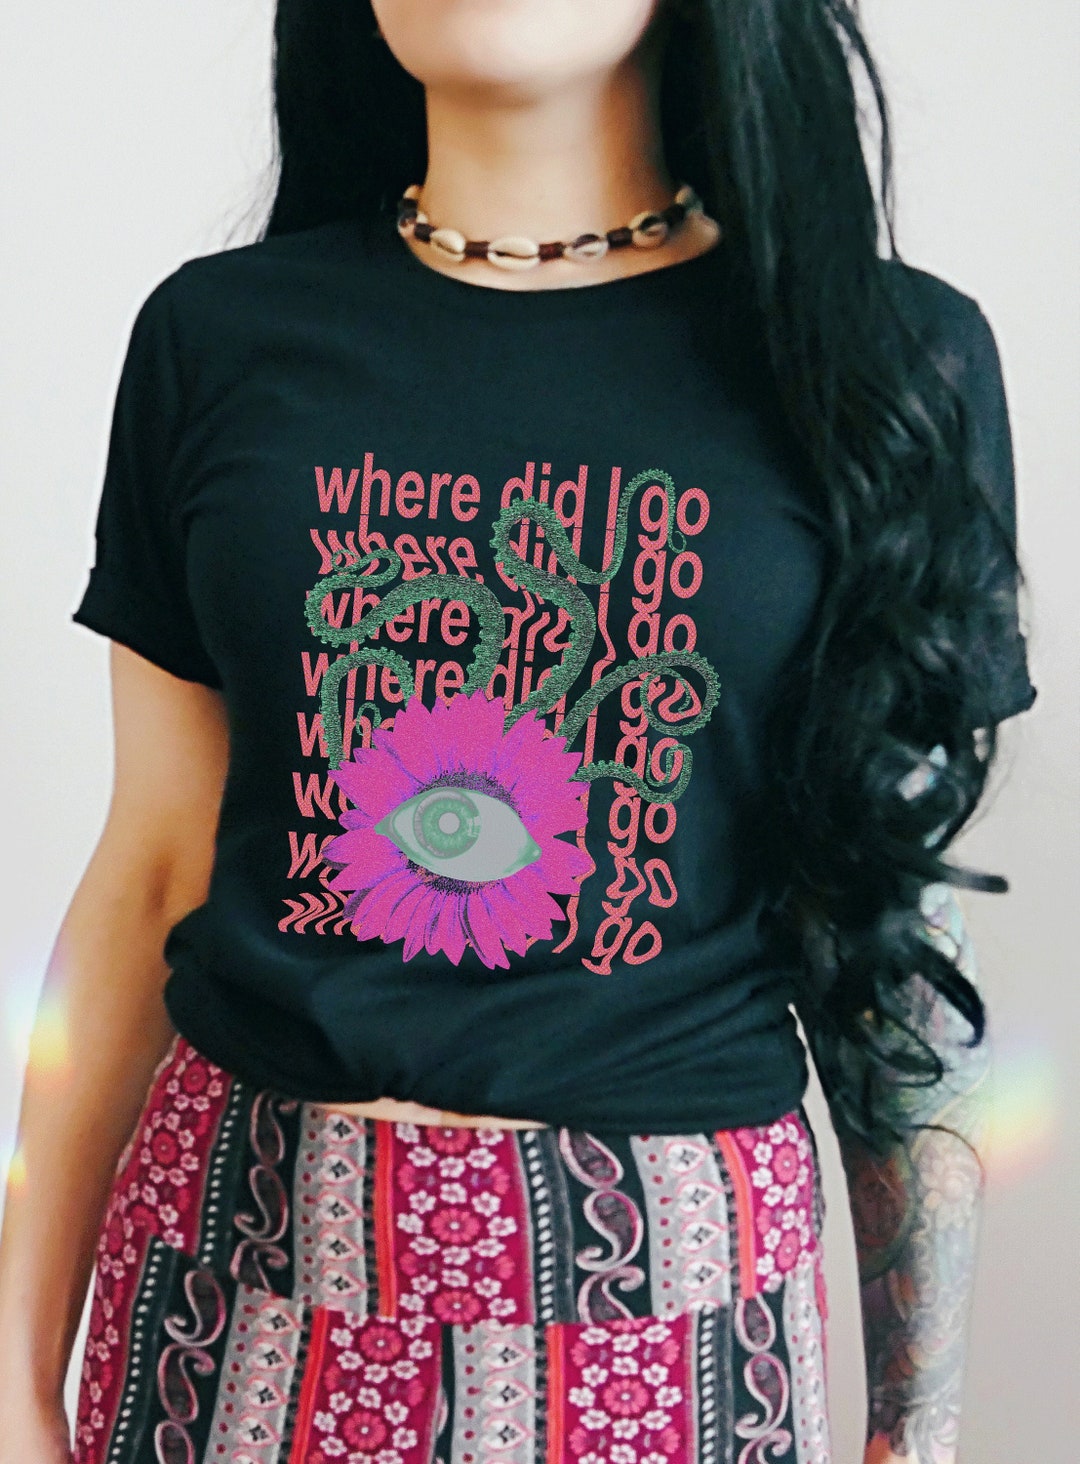 Weirdcore Aesthetic Alt Indie Dreamcore' Women's Plus Size T-Shirt